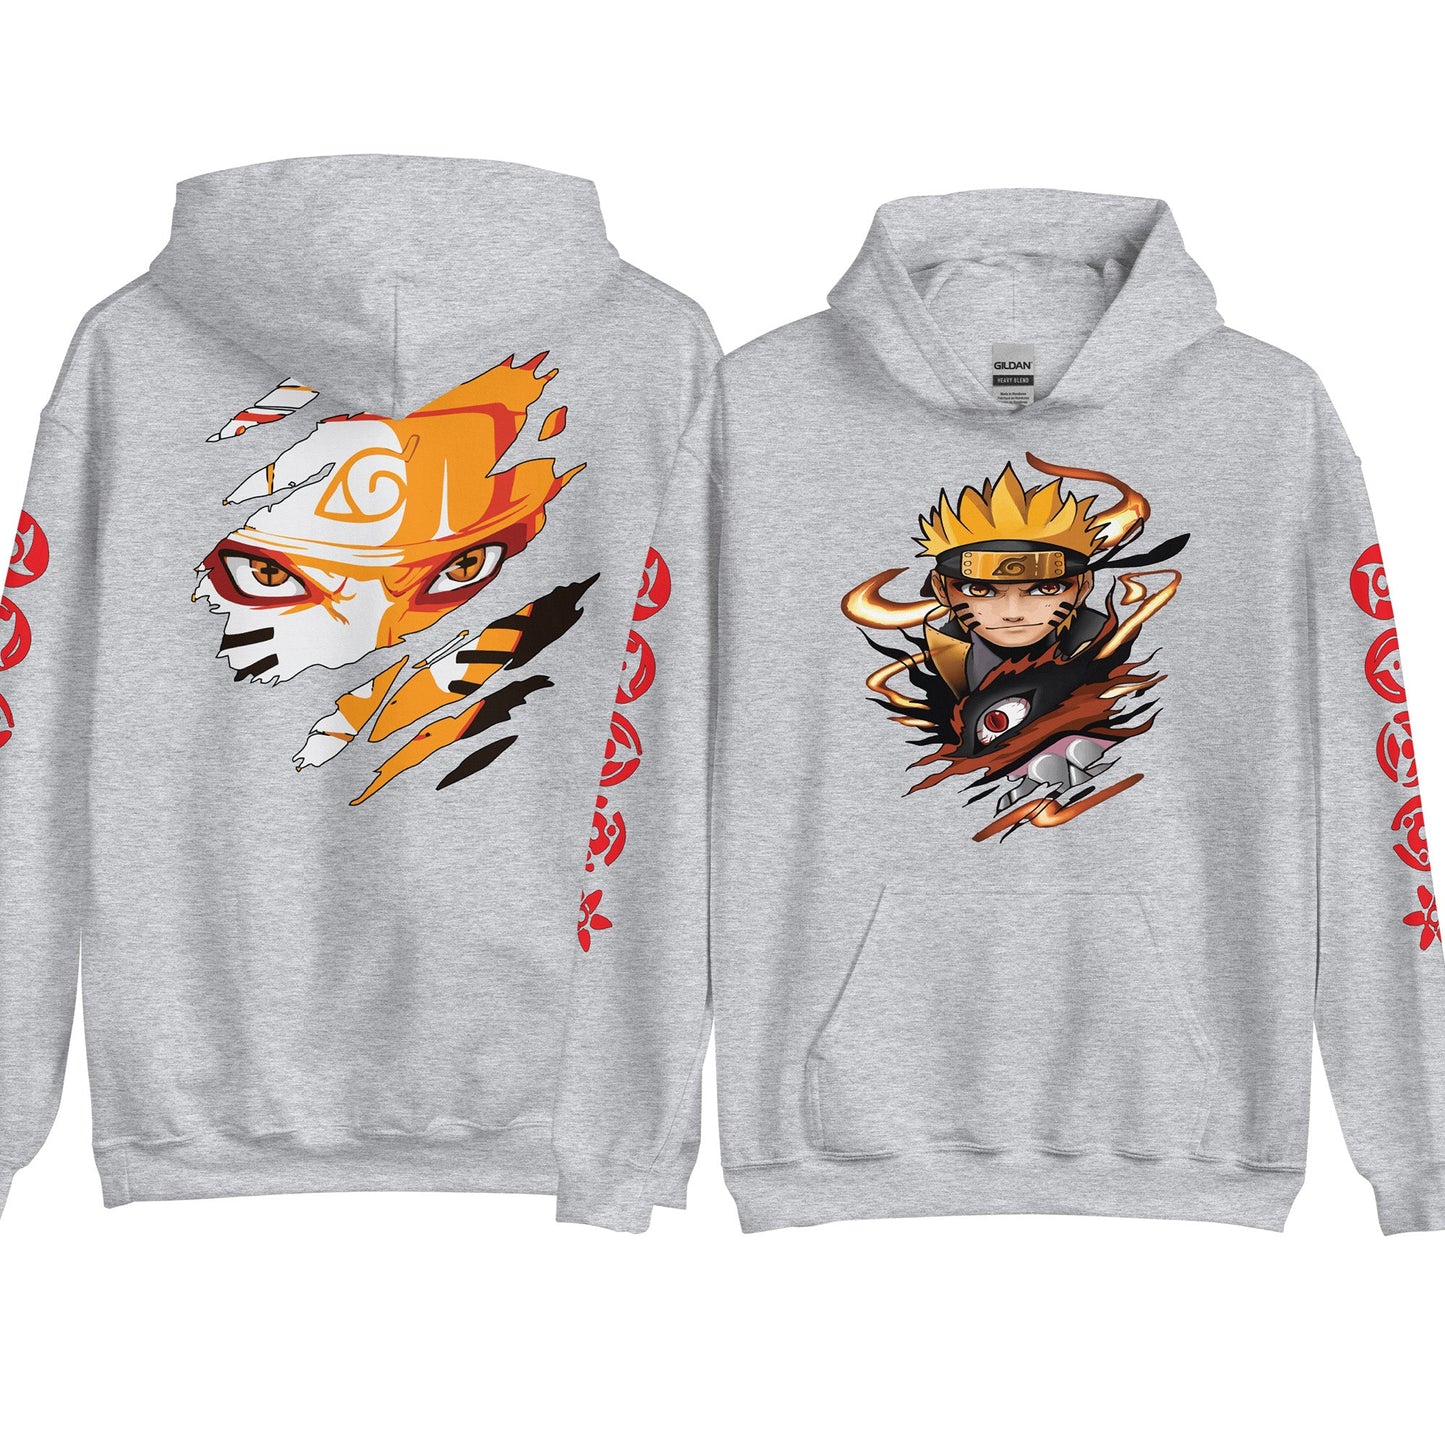 Inspiring anime hoodie - Naruto Uzumaki - The Truth Graphics